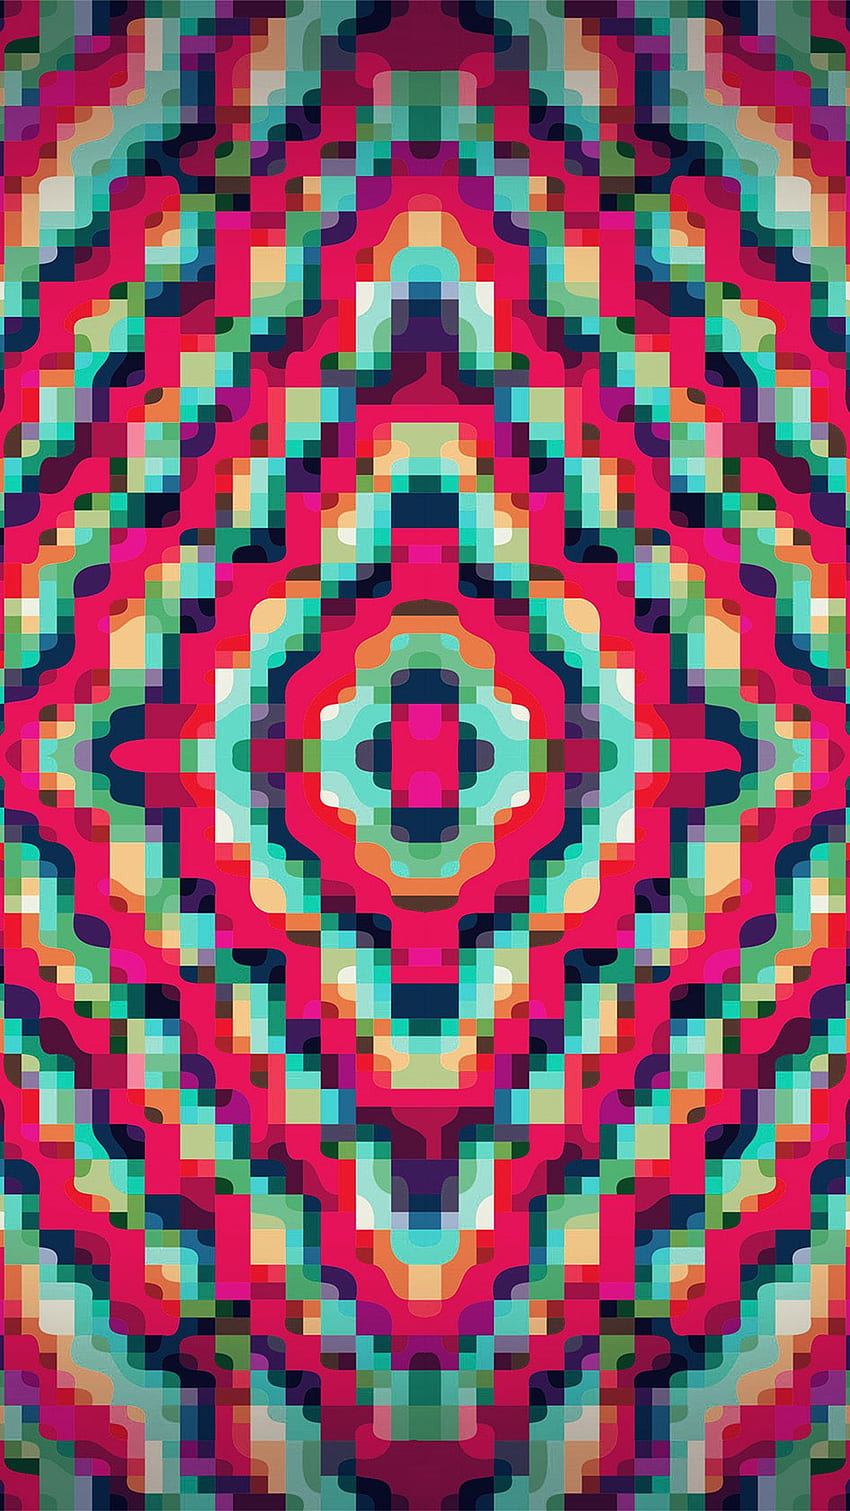 iPhoneX. color arco iris arte encantador patrón resumen fondo de pantalla del teléfono